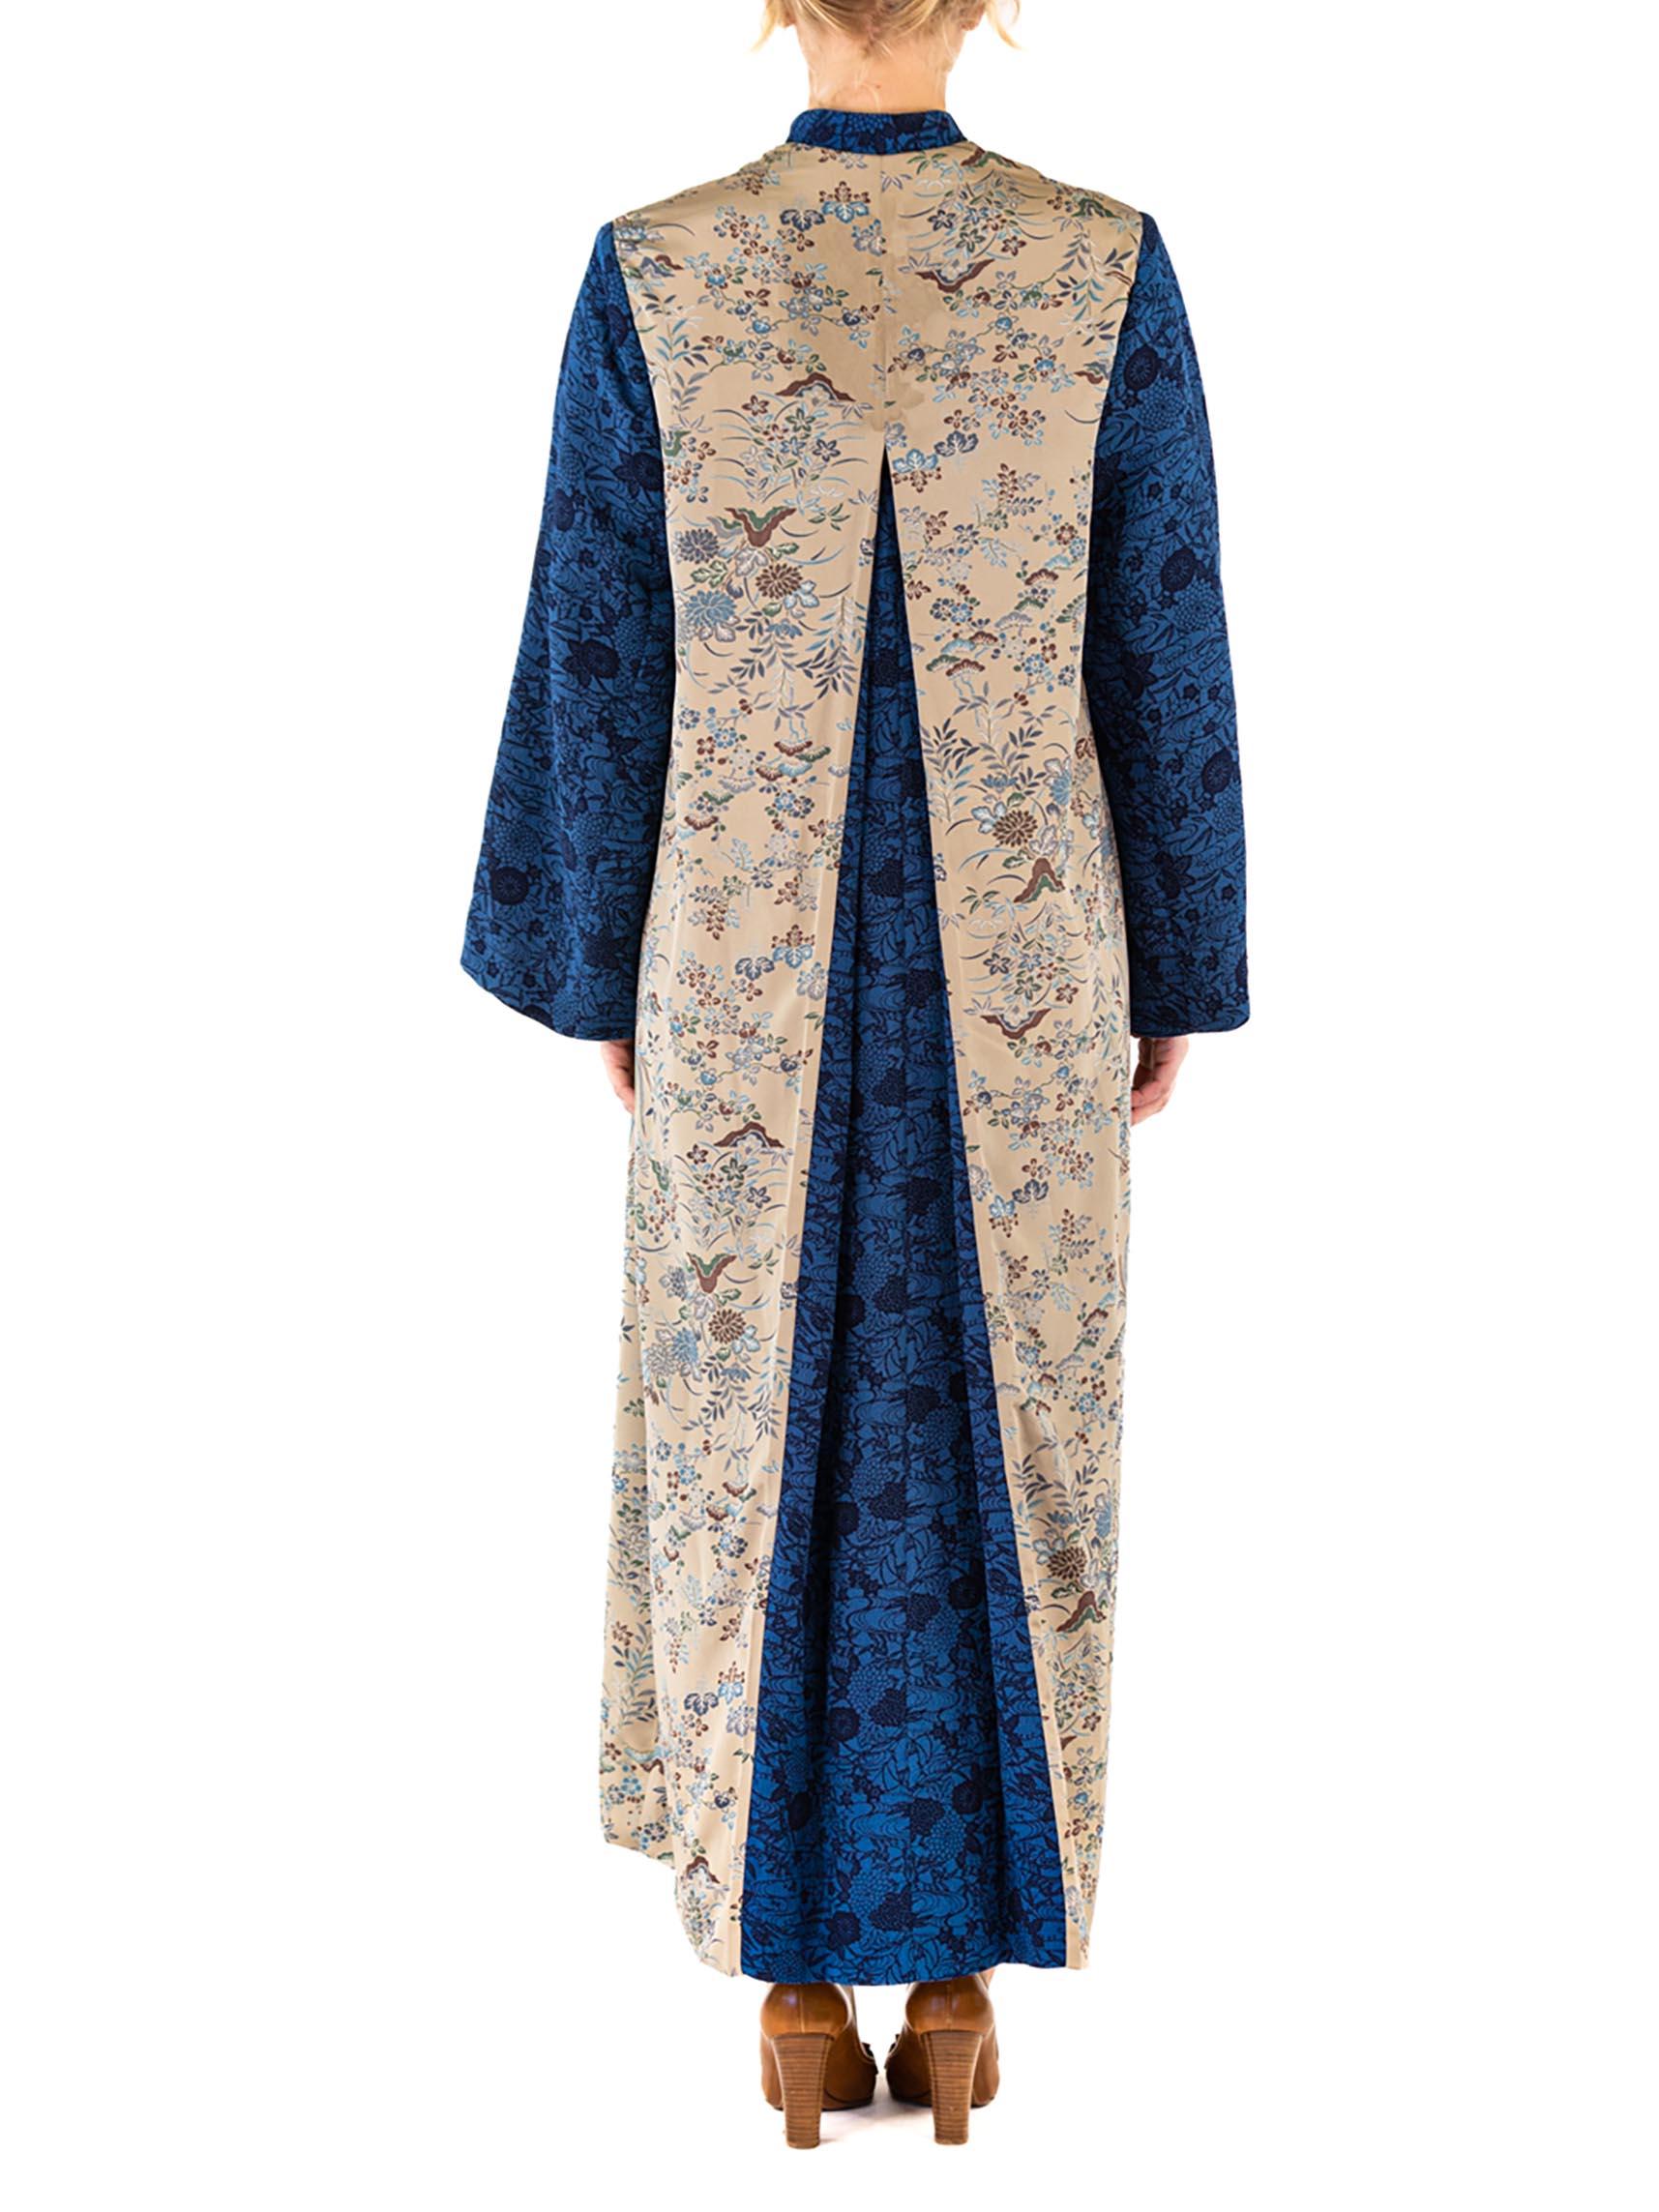 MORPHEW COLLECTION Ecru Japanese Kimono Silk Royal Blue Sleeves Duster For Sale 1